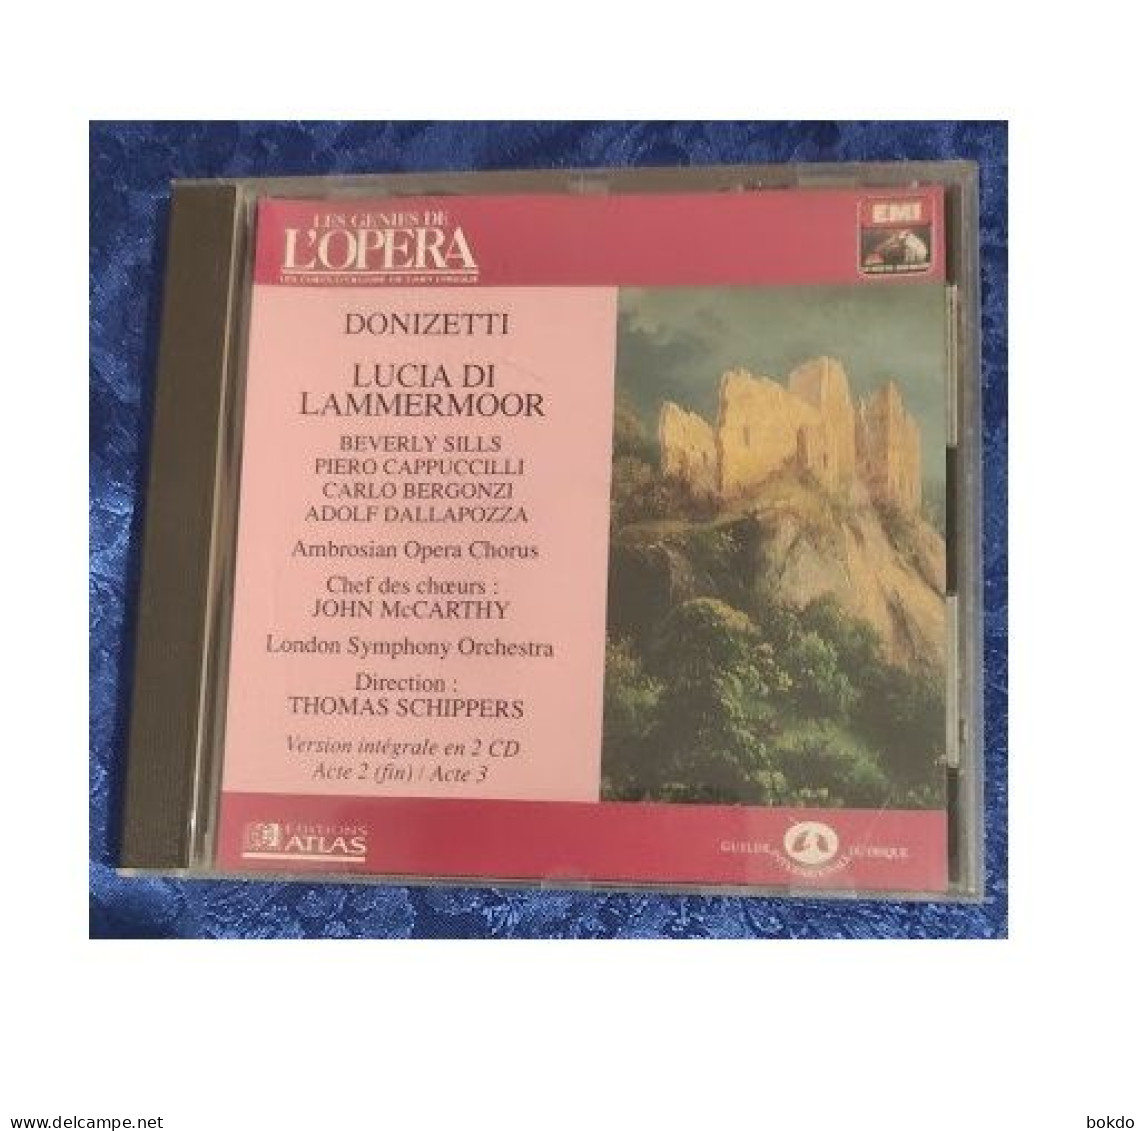 Les Génies De L'opéra - Donizetti - Lucia Di Lammermoor - Clásica